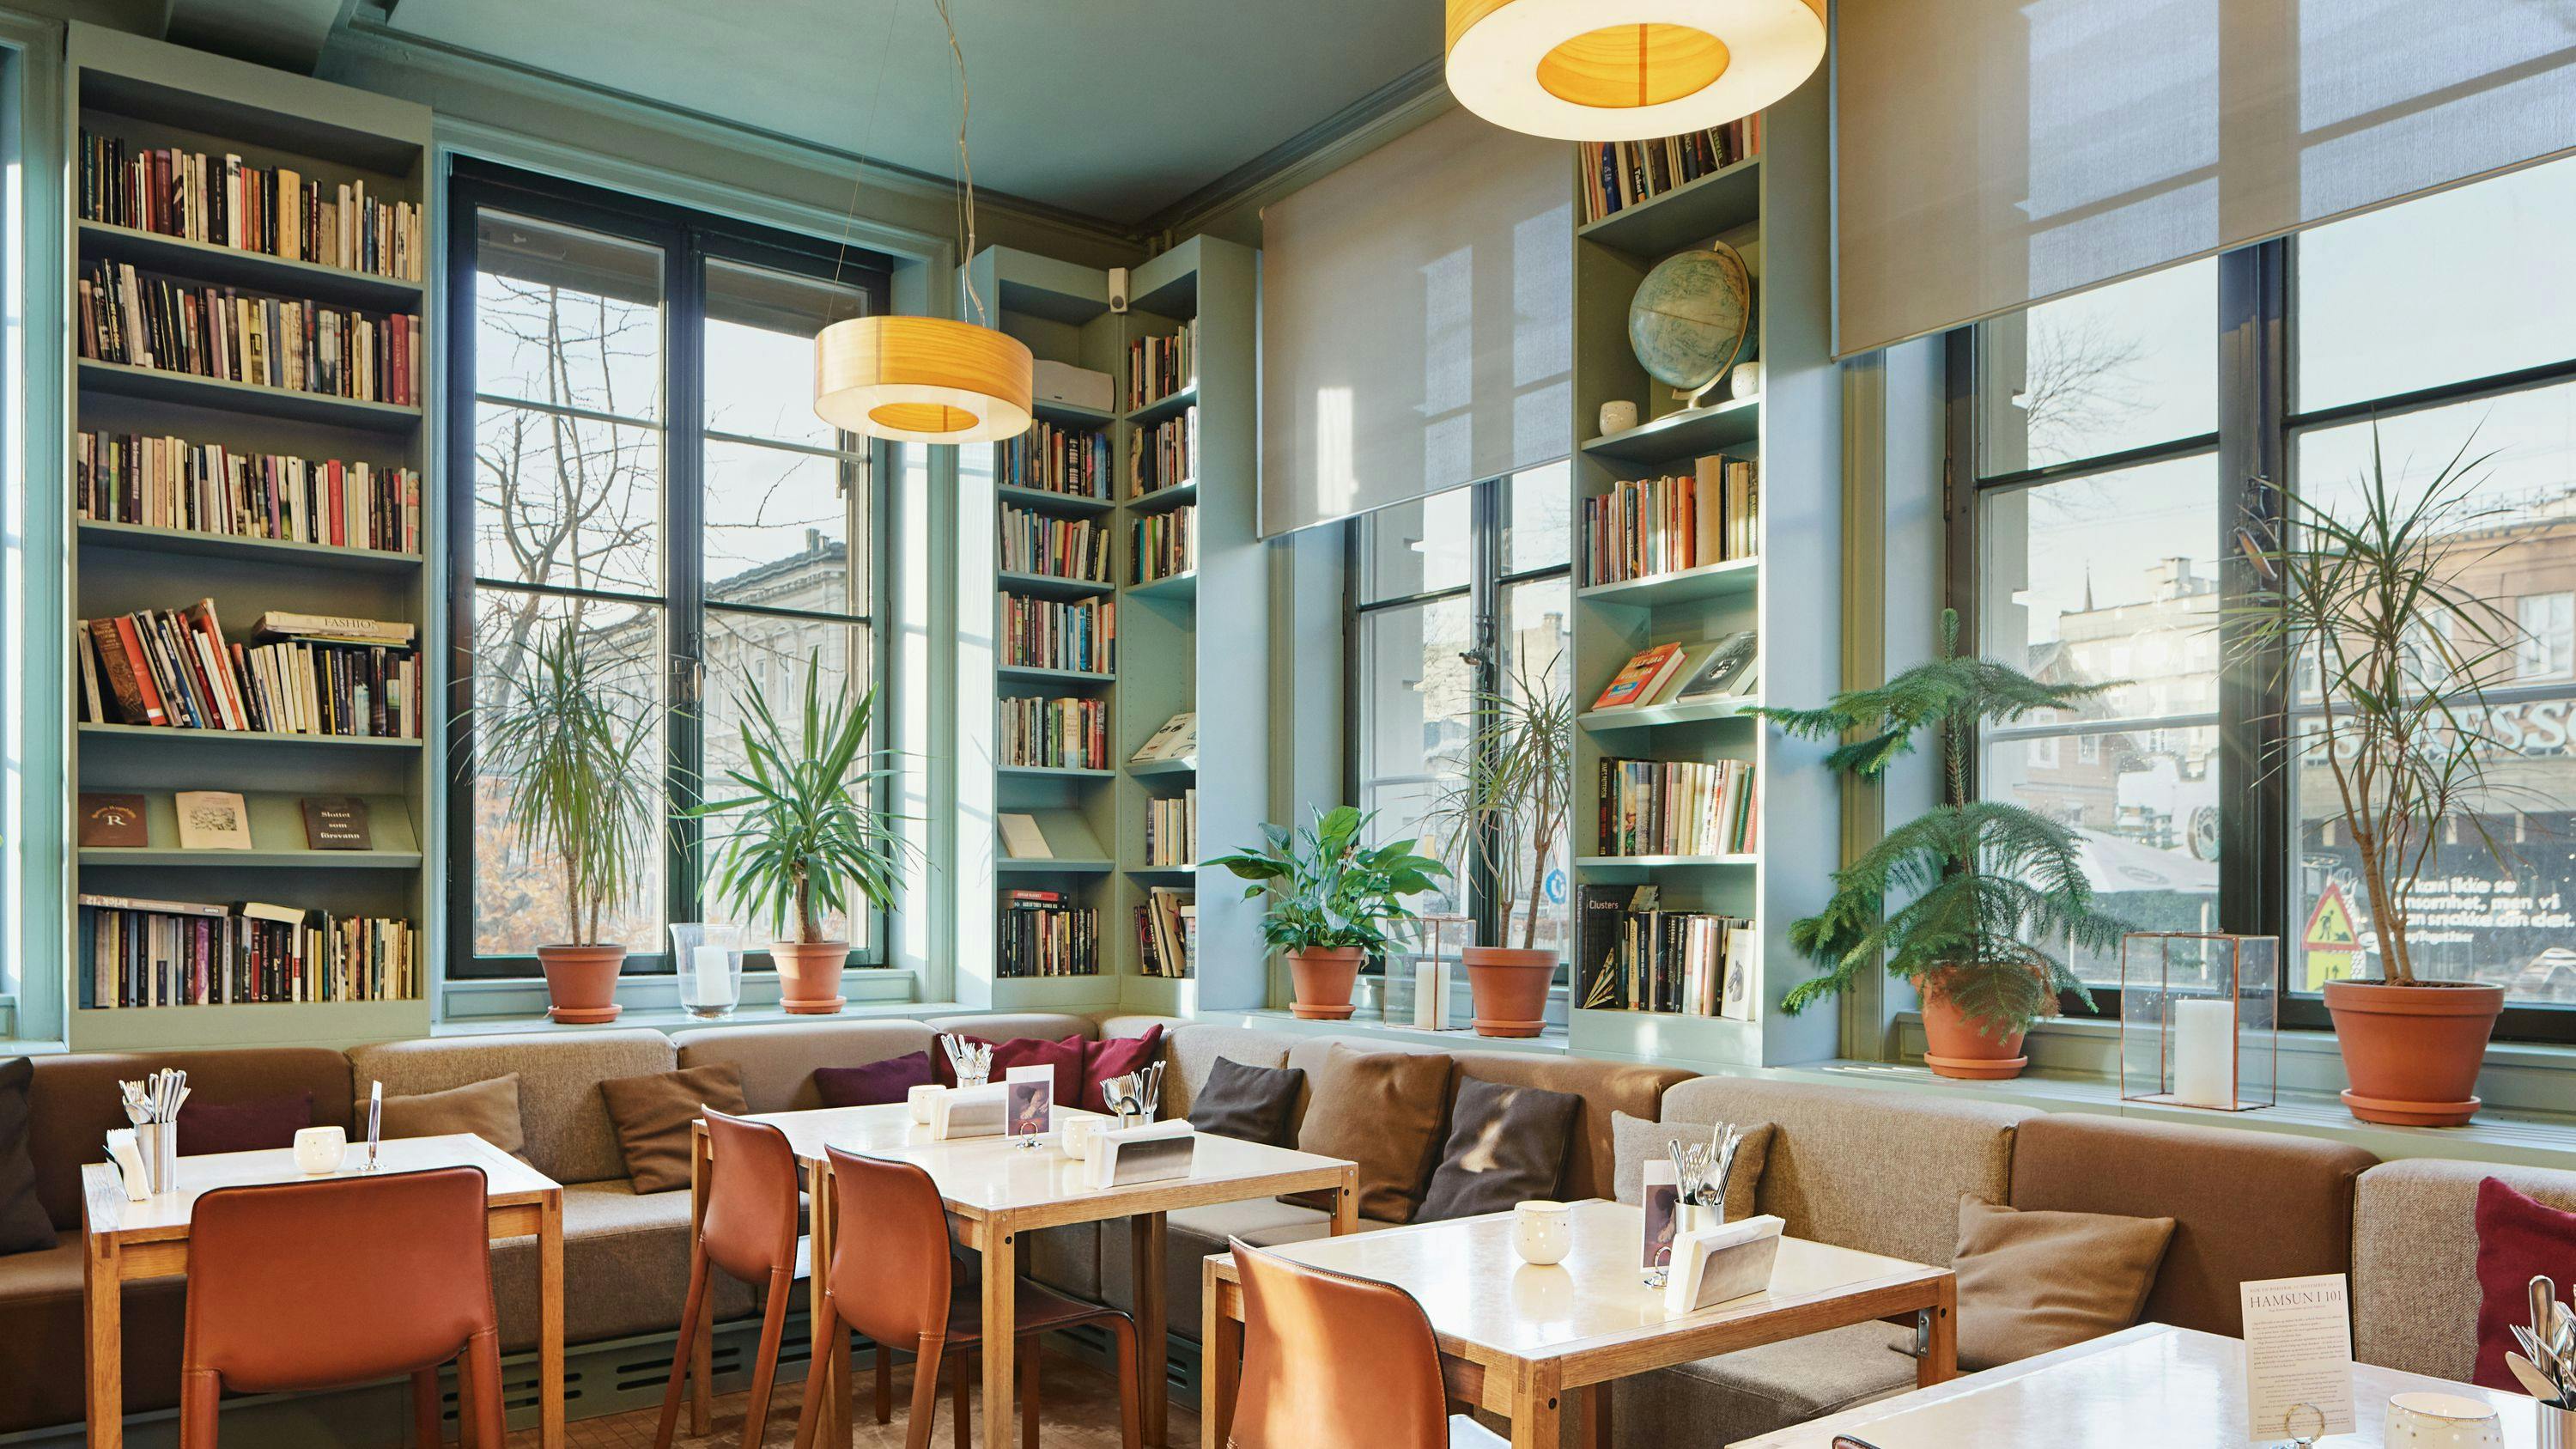 Bilde av spisesalen i Litteraturhusets restaurant Kafe Oslo